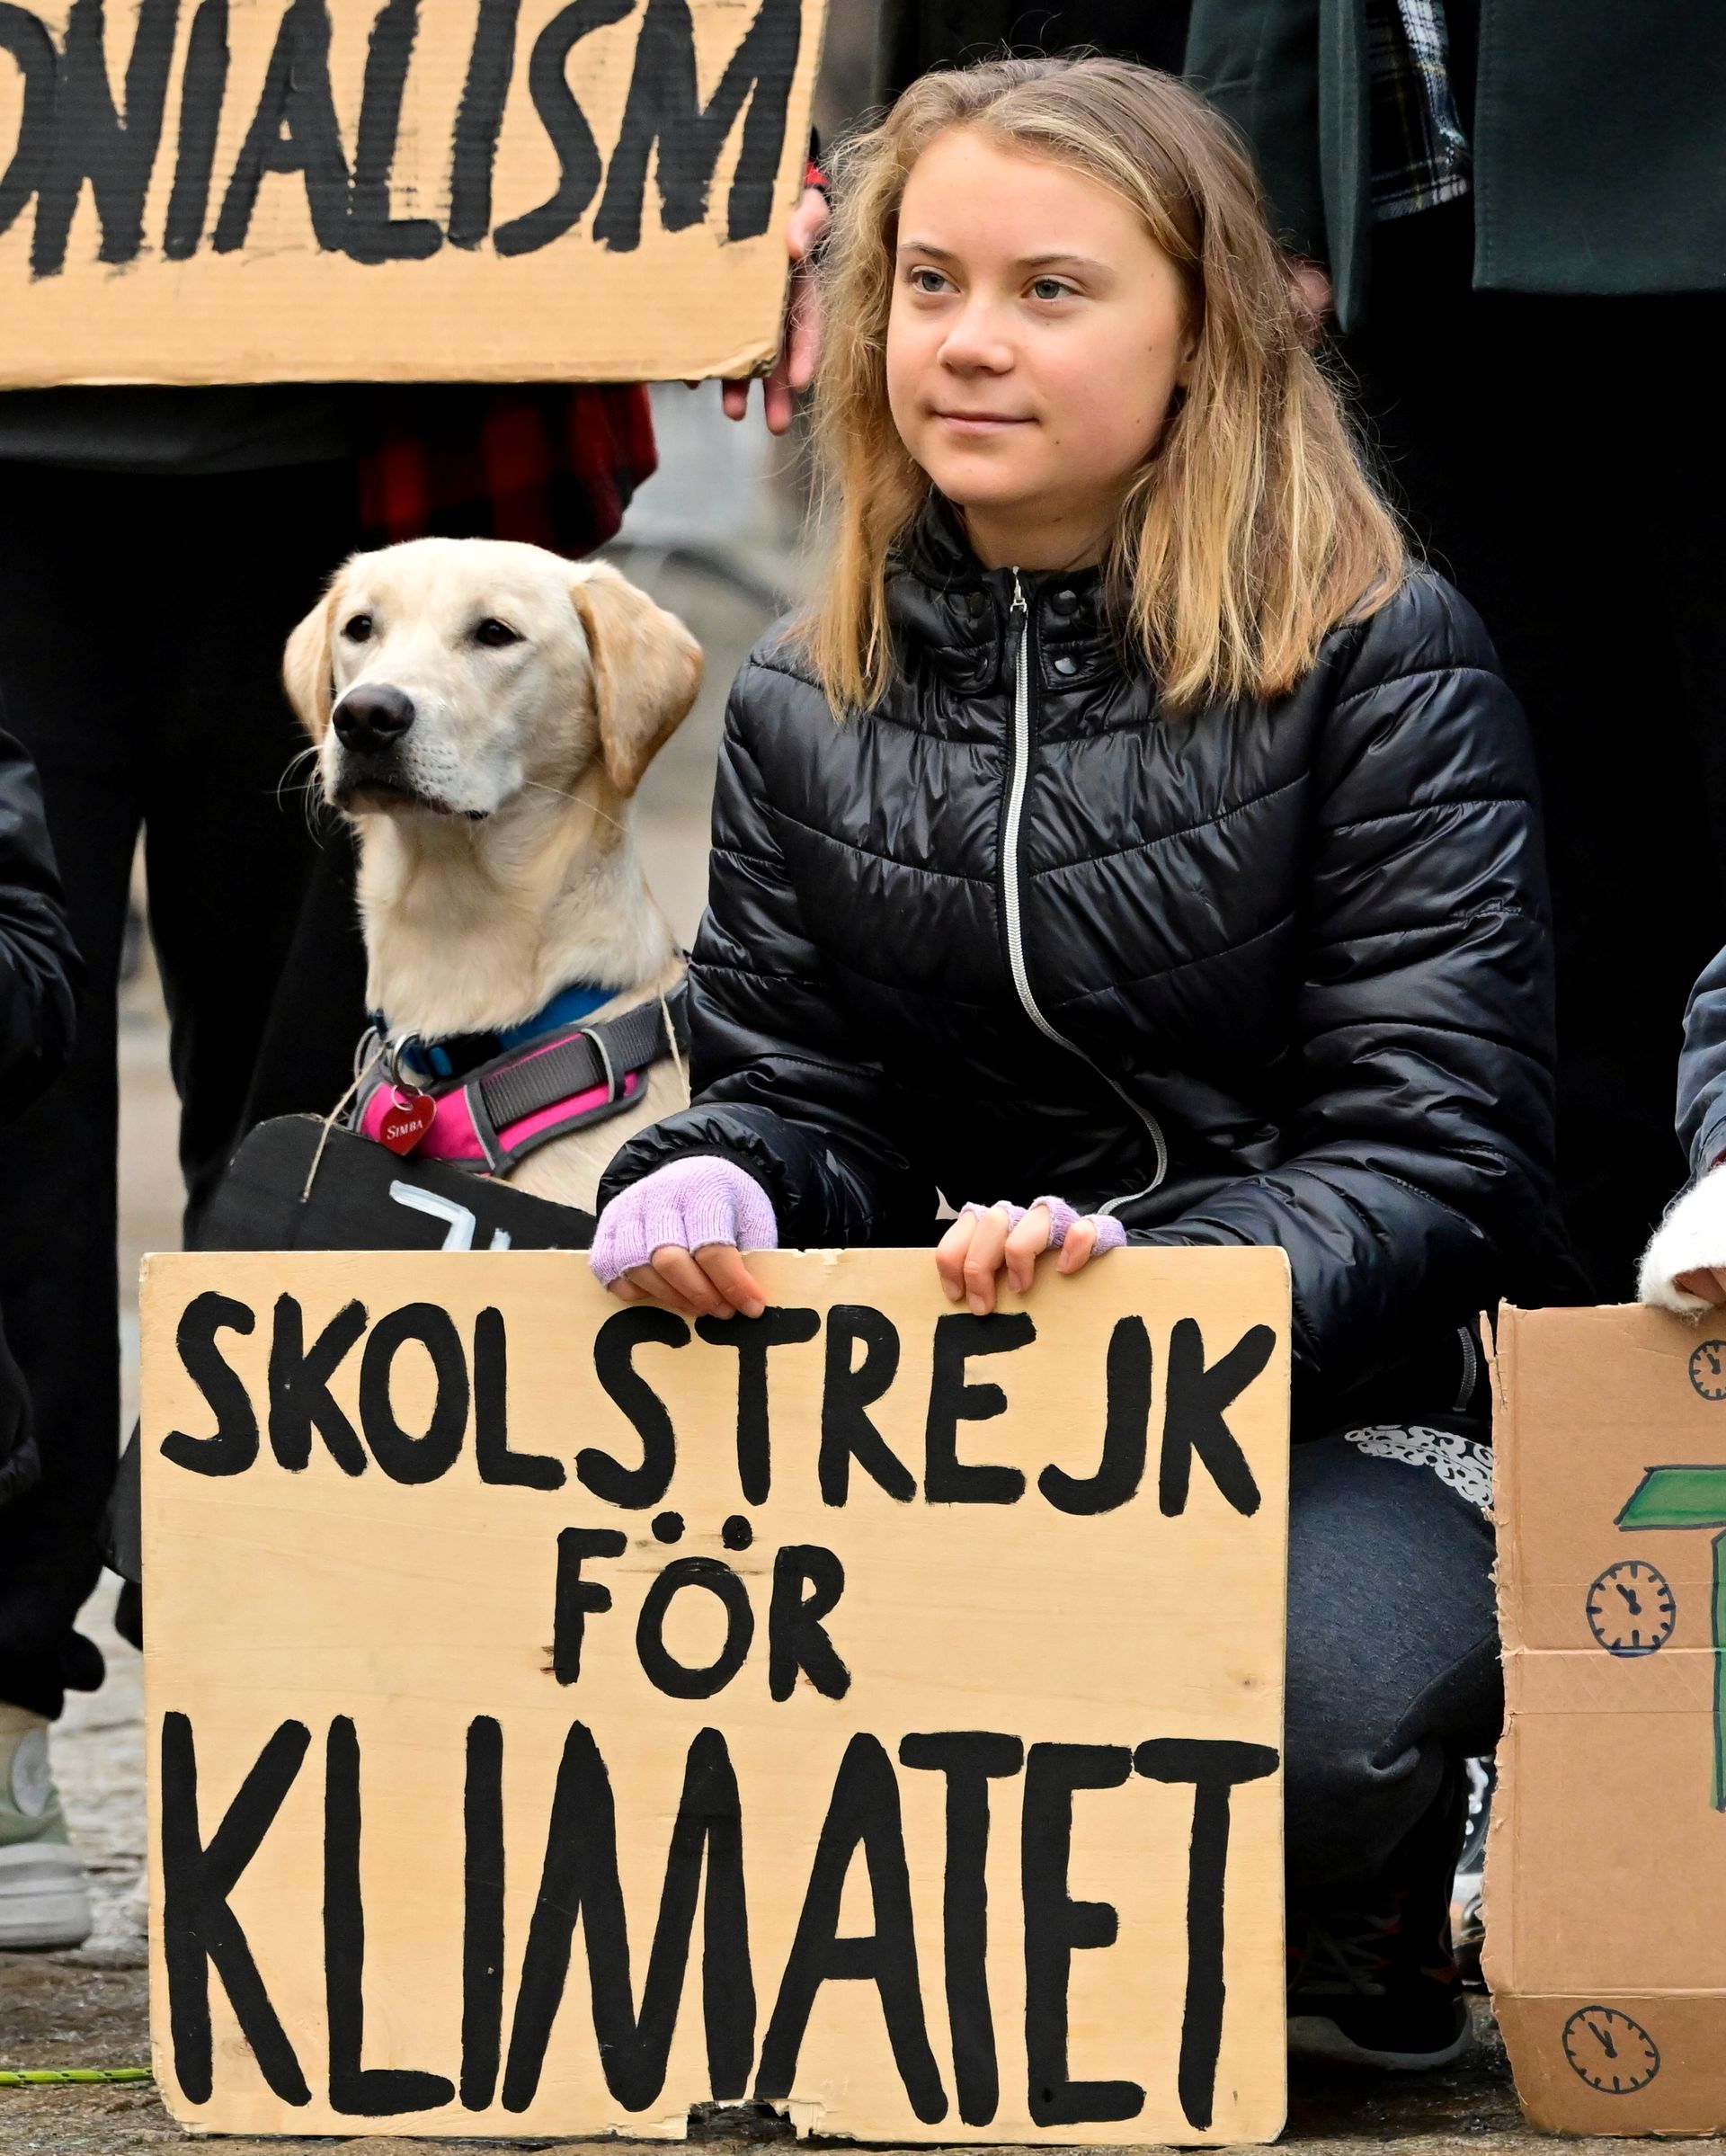 En ung kvinne med langt, mellombrunt hår sitter ved siden av en hund med en plakat der det står "skolstrejk för klimatet".